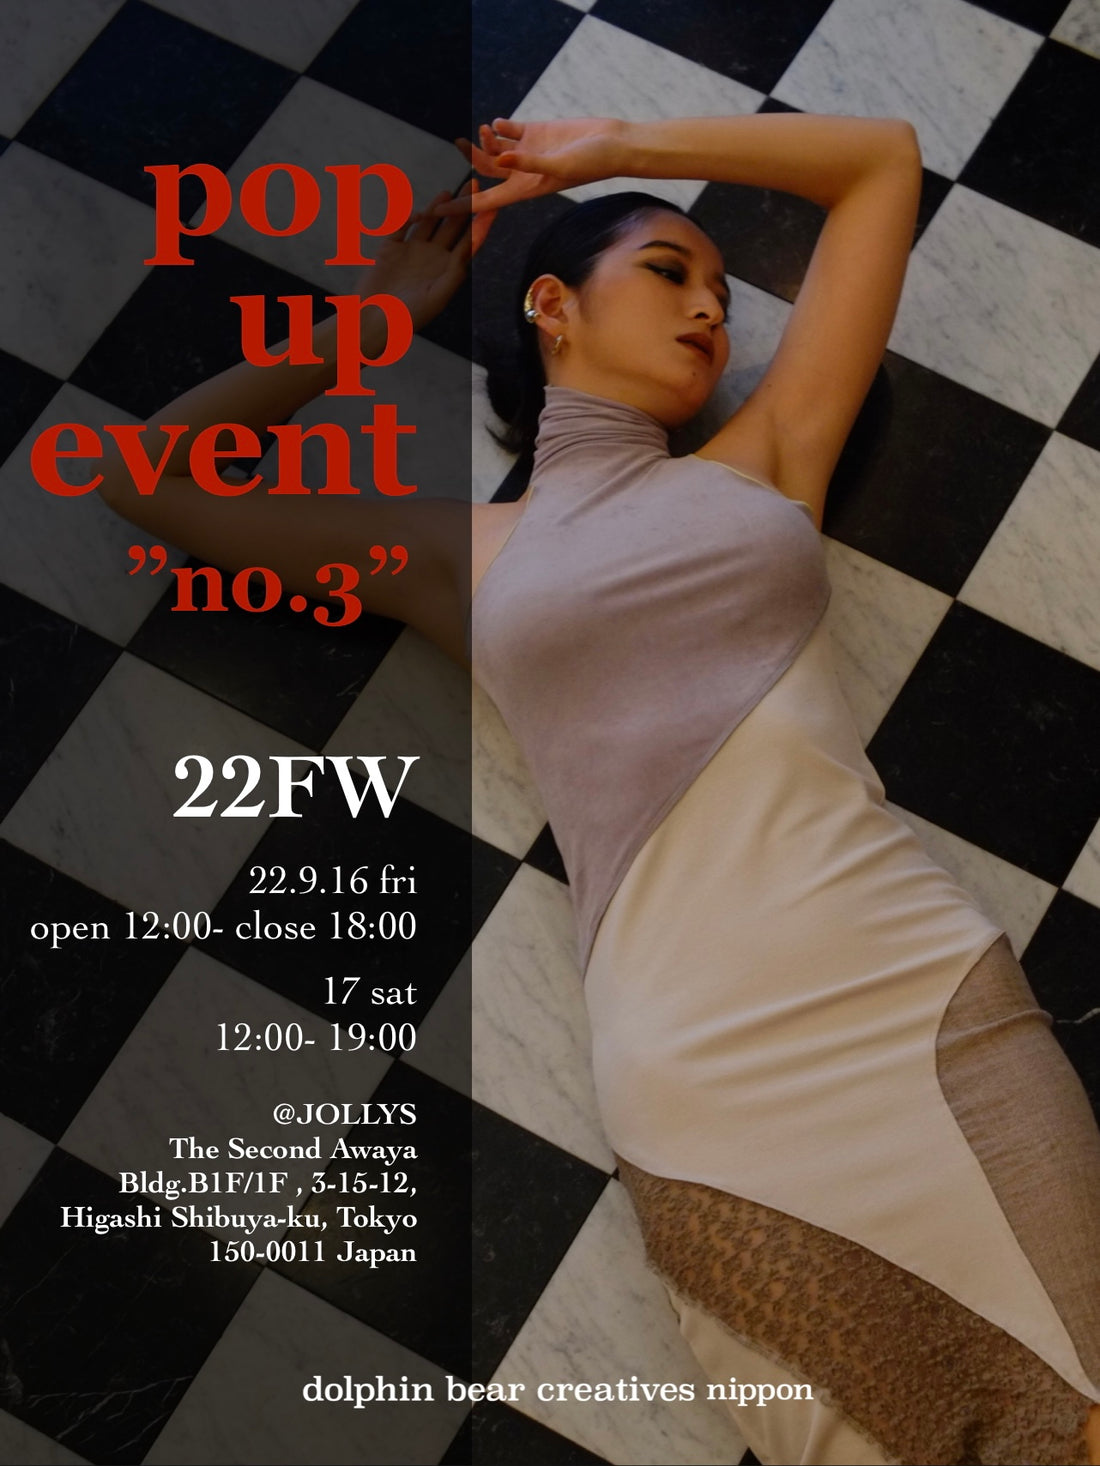 【FW22 POP UP EVENT “no.3”】2022.9.16fri -17sat open12:00- close 19:00 @JOLLYS